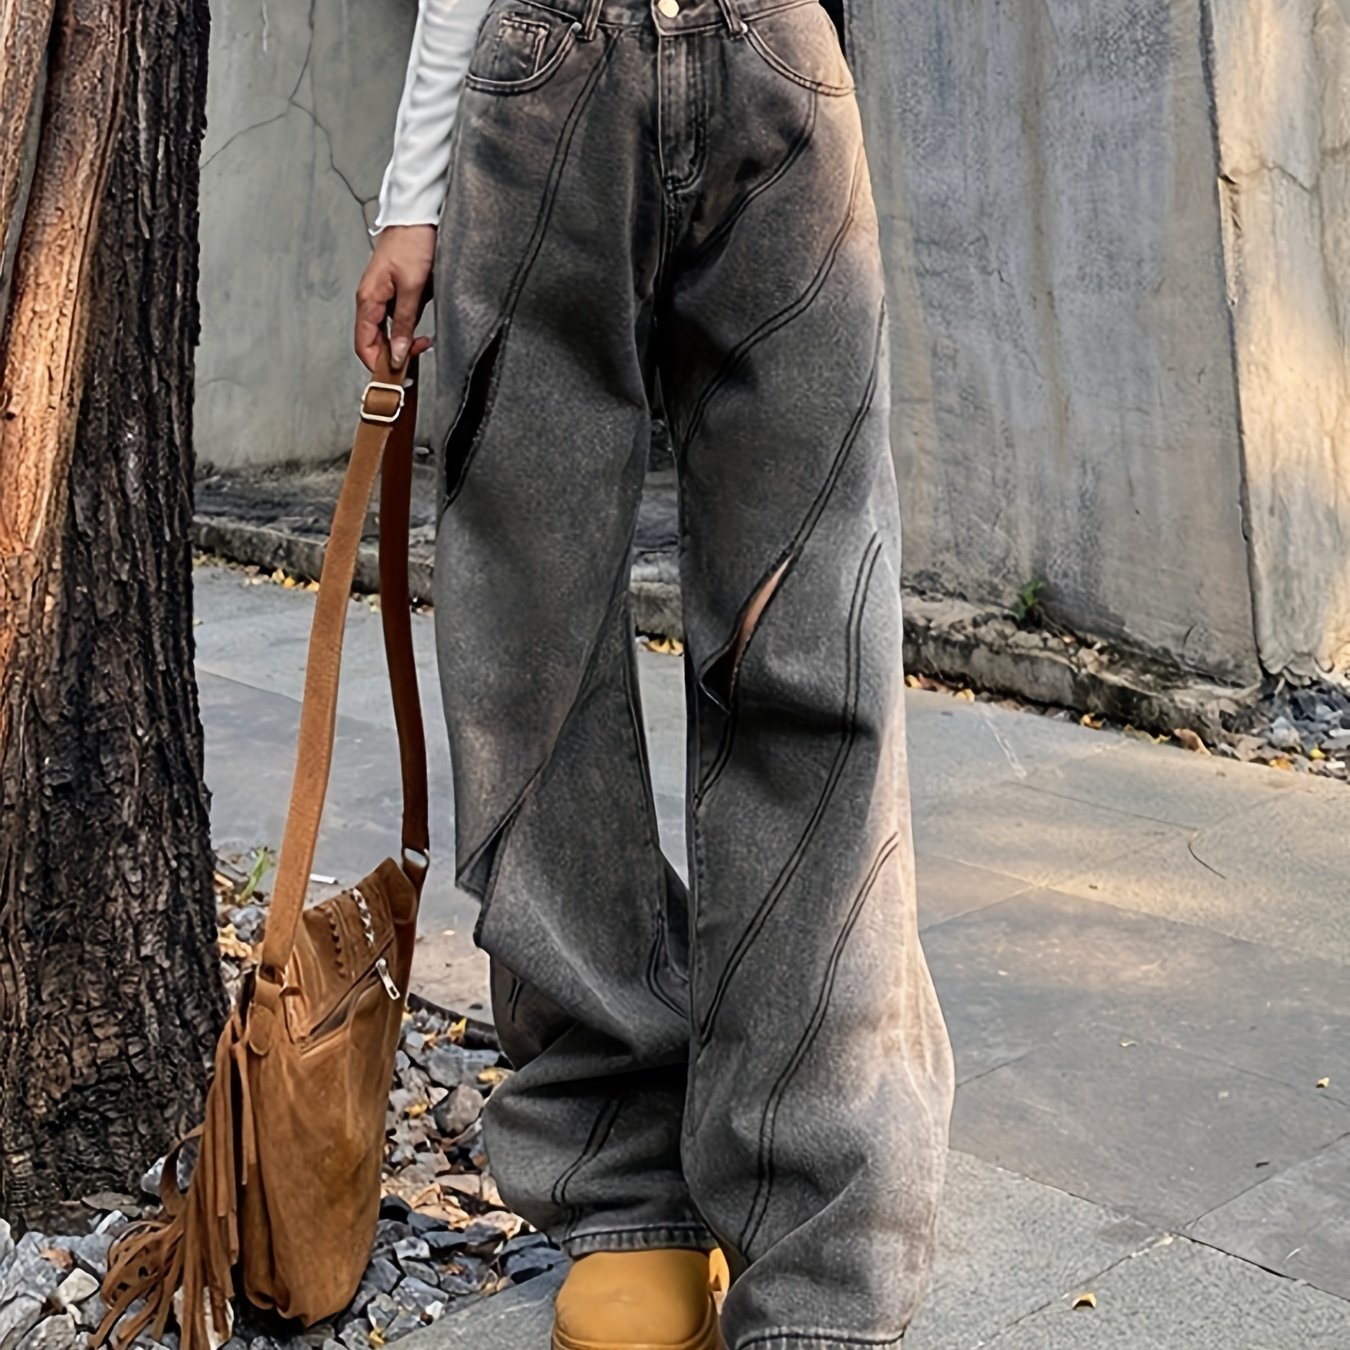 「binfenxie」Cut Out Stitching Detail Wide Leg Jeans, Dark Grey Washed Zipper Button Closure Street Style Denim Pants, Women's Denim Jeans & Clothing